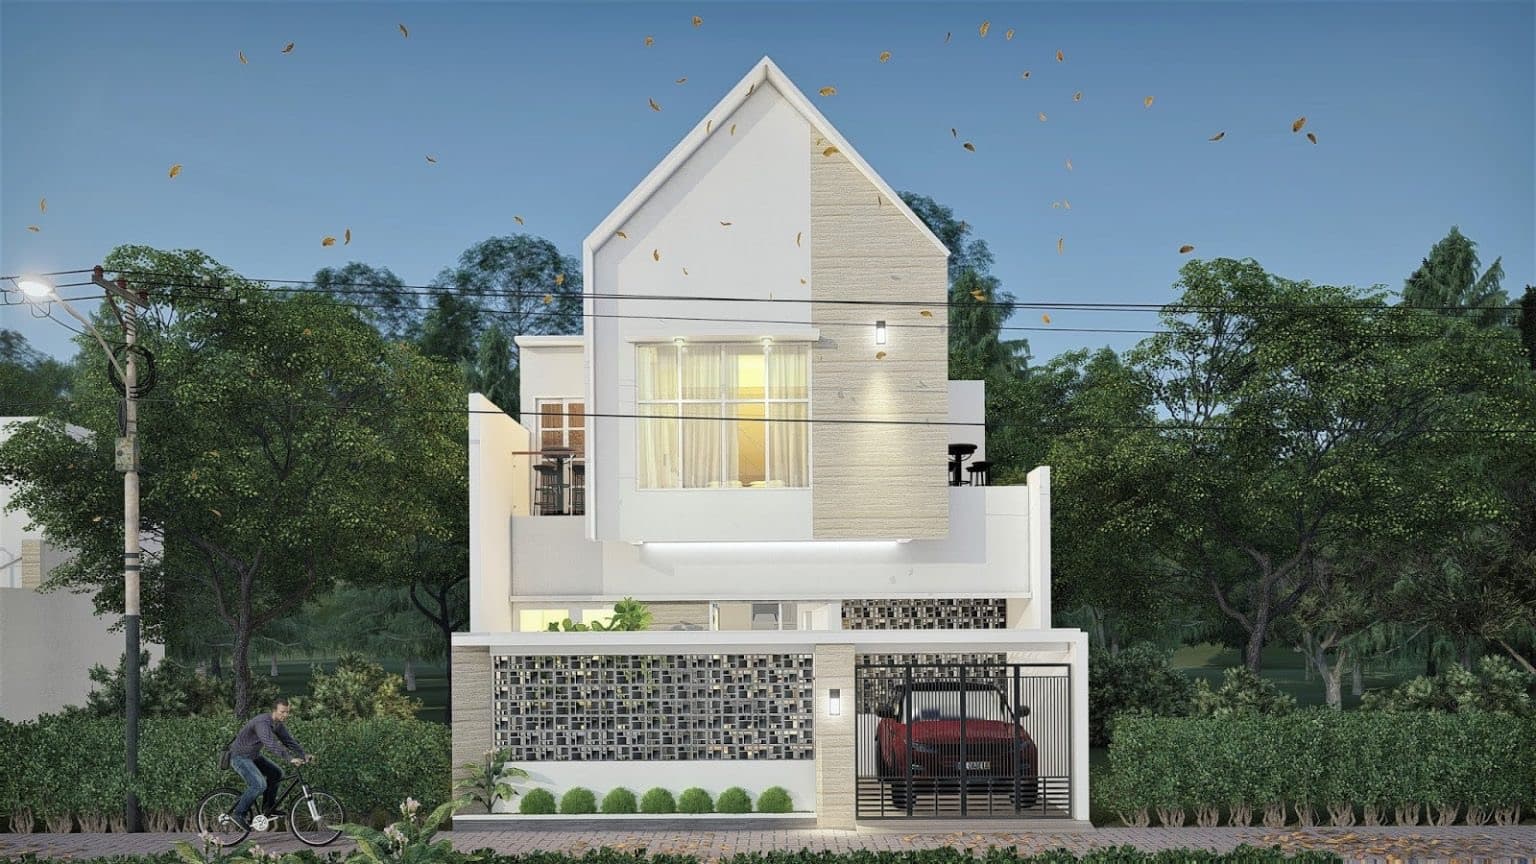 Rumah modern minimalis 2 lantai dengan lahan sempit - Thegorbalsla